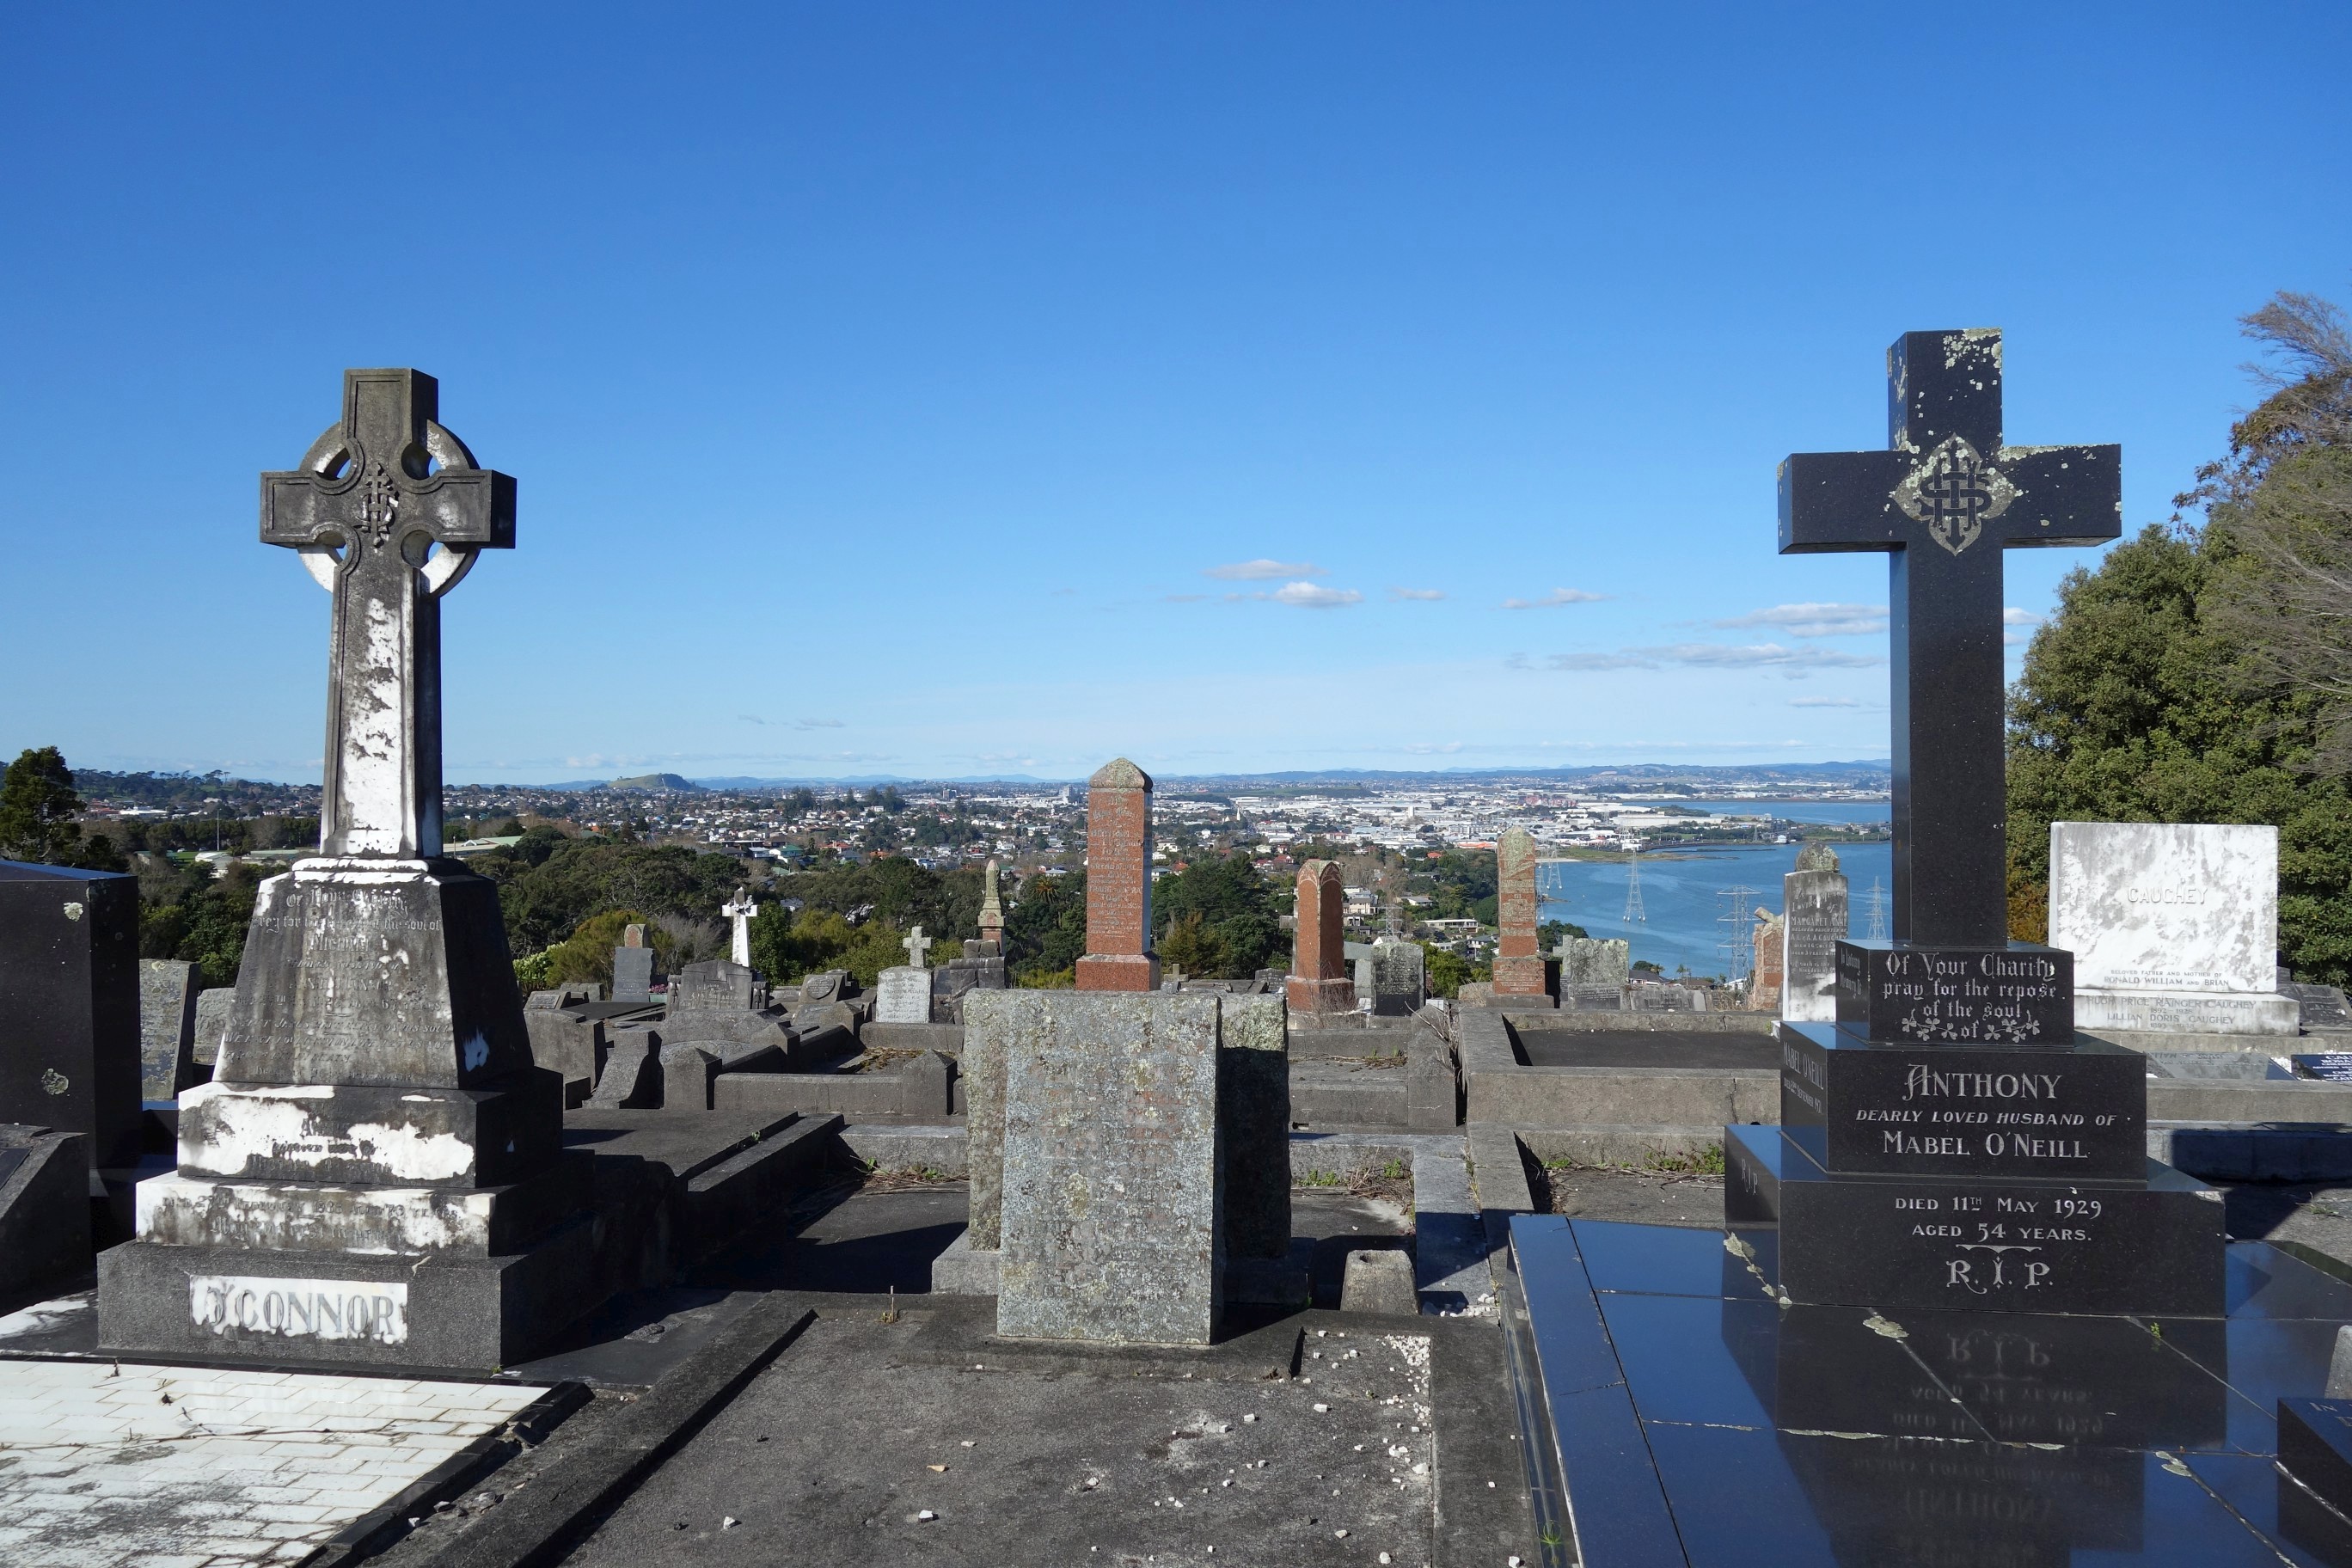 New Zealand cemeteries